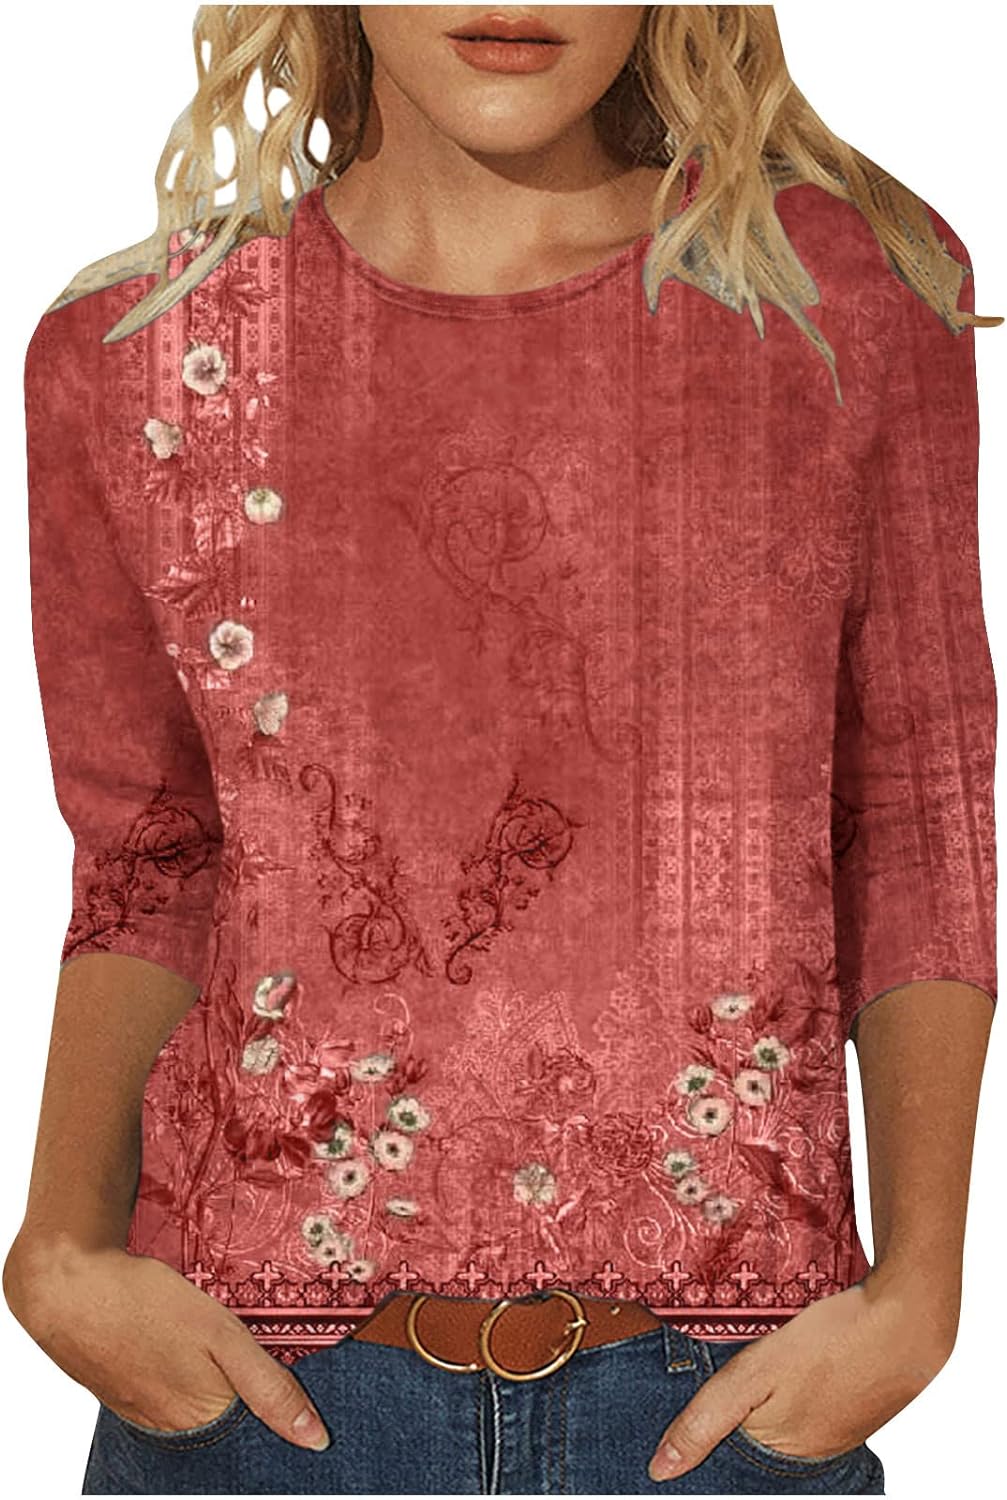 Womens Tops 3/4 Sleeve Summer Cute Tops Casual Crewneck Three Quarter Sleeve T Shirts Bohemian Printed Blouses